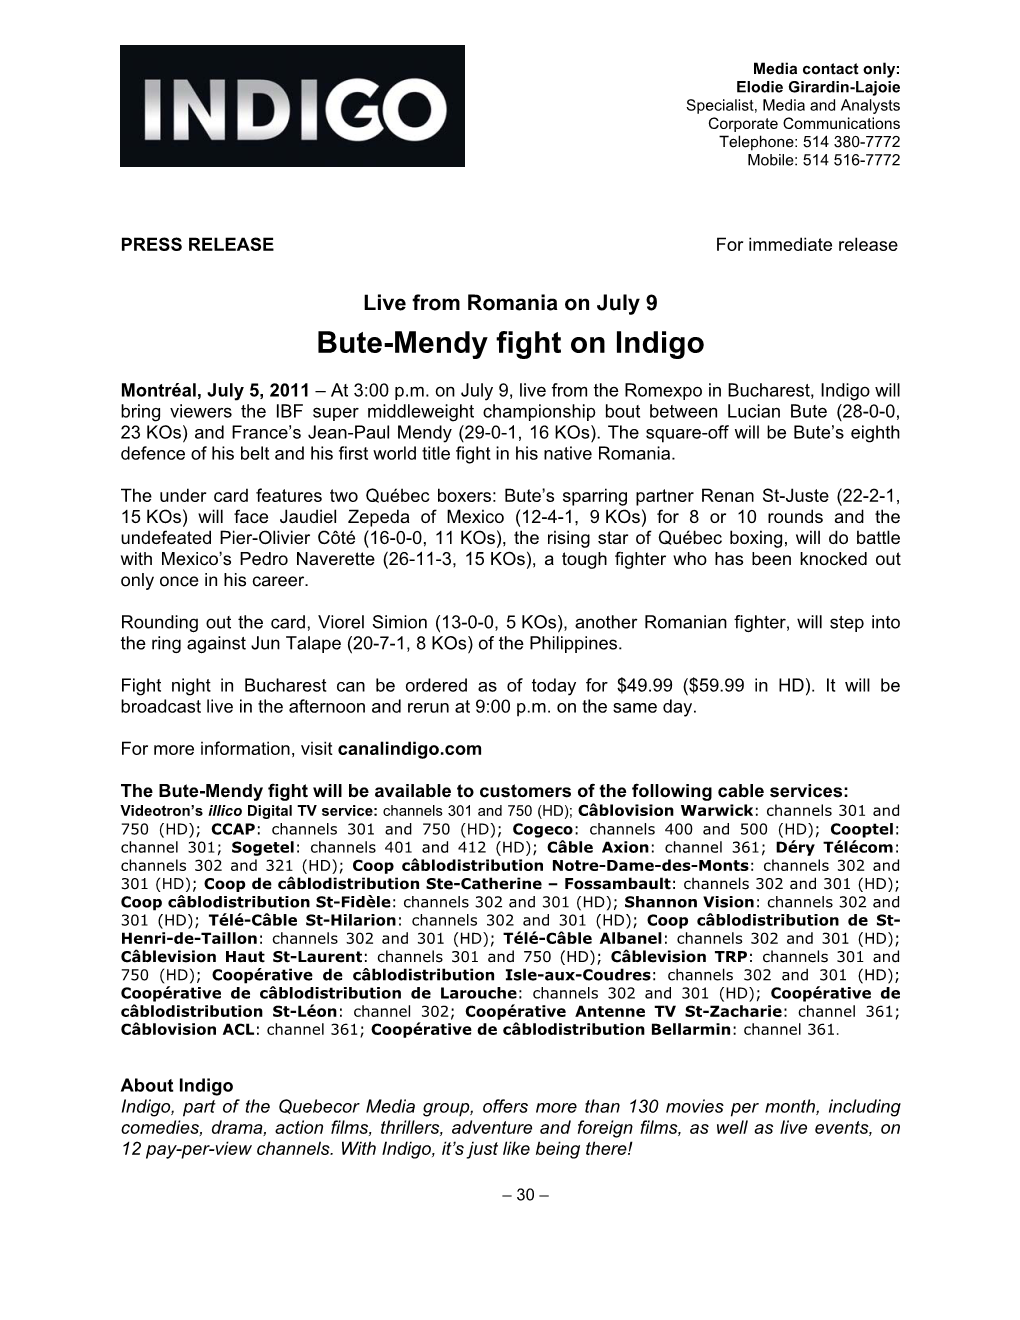 Bute-Mendy Fight on Indigo